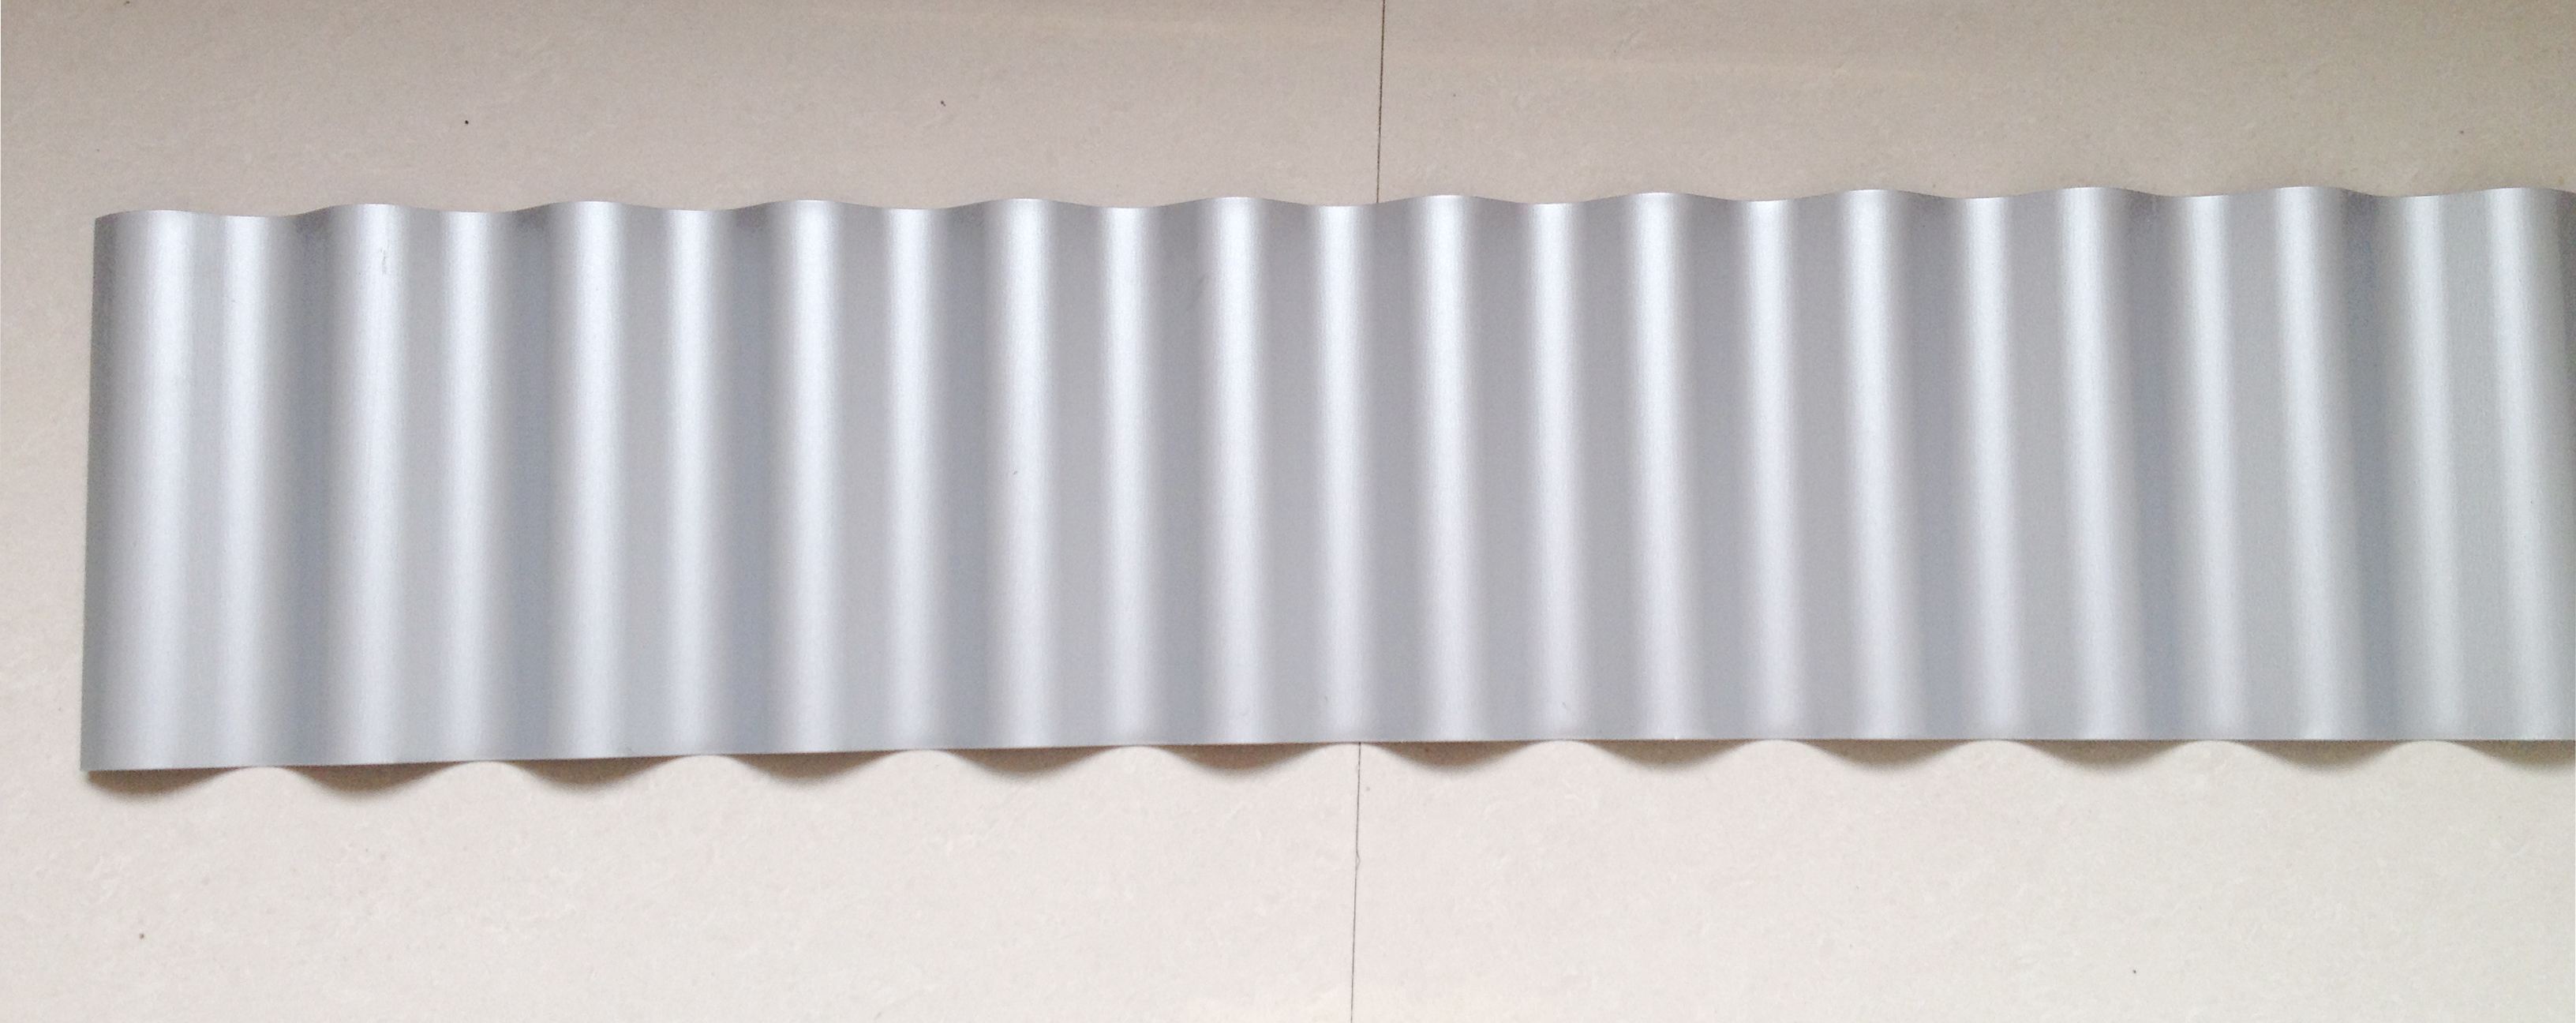 corrugated steel backsplash